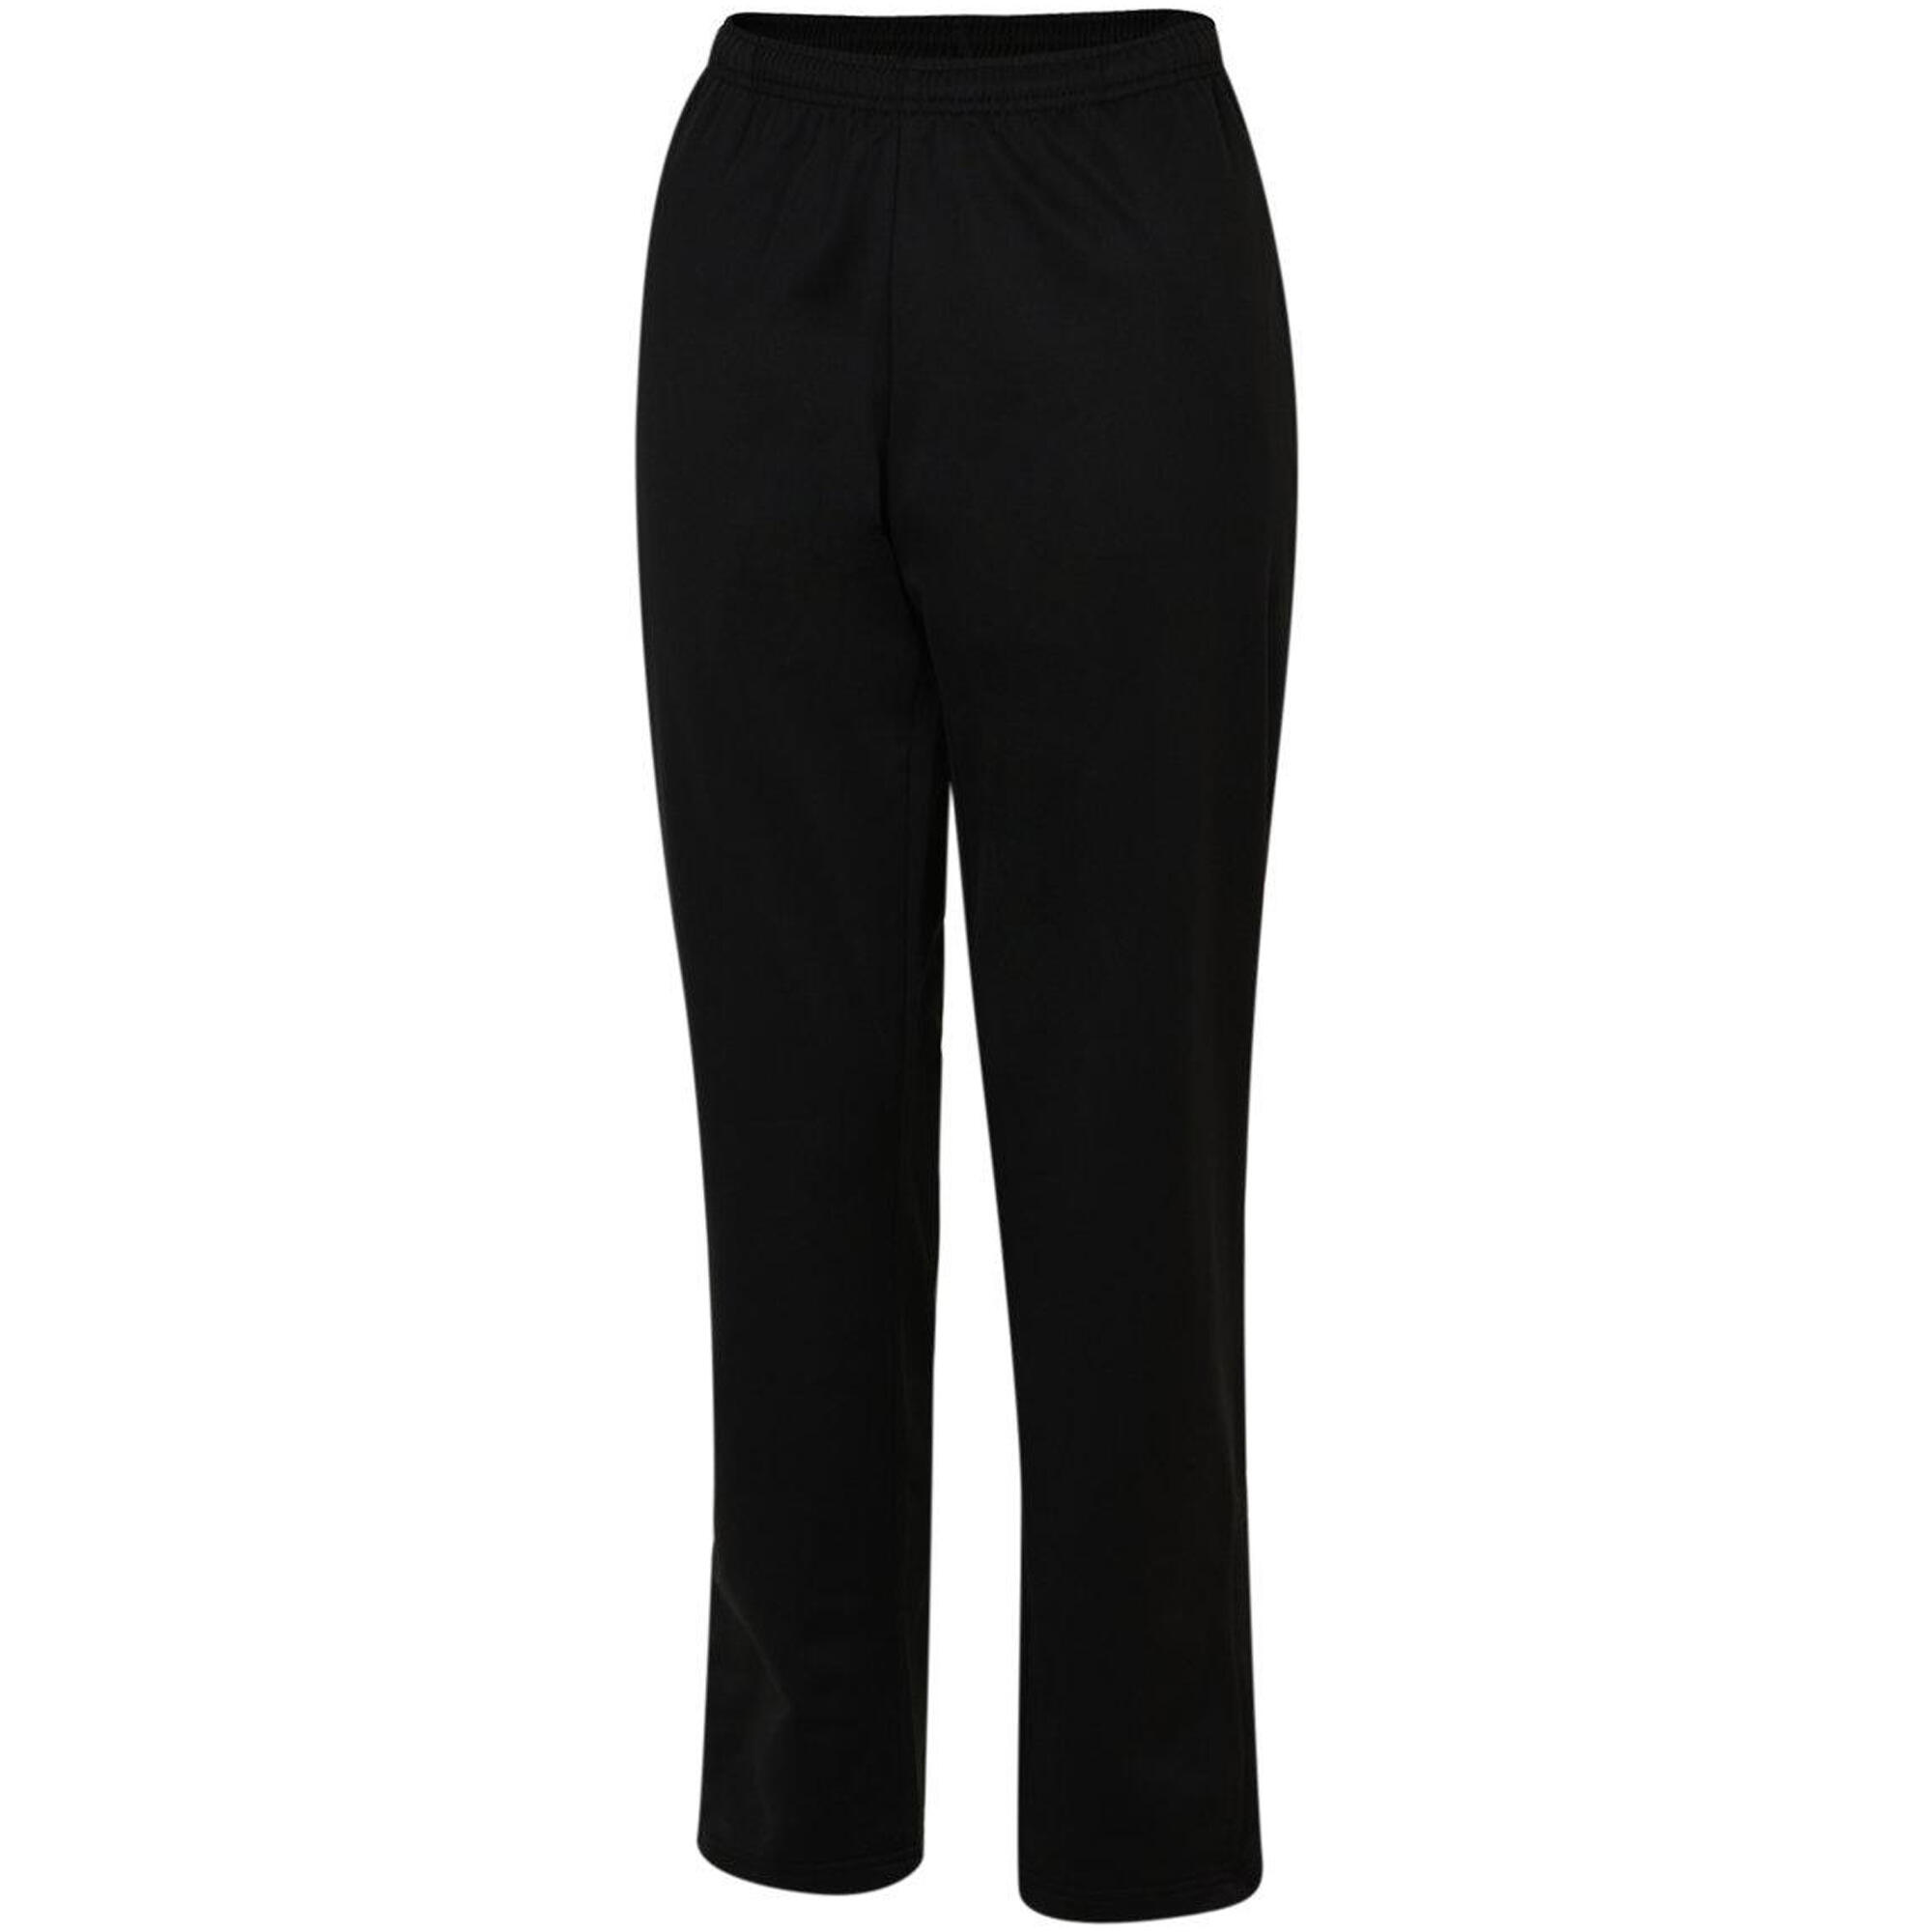 UMBRO Womens/Ladies Club Essential Polyester Jogging Bottoms (Black)